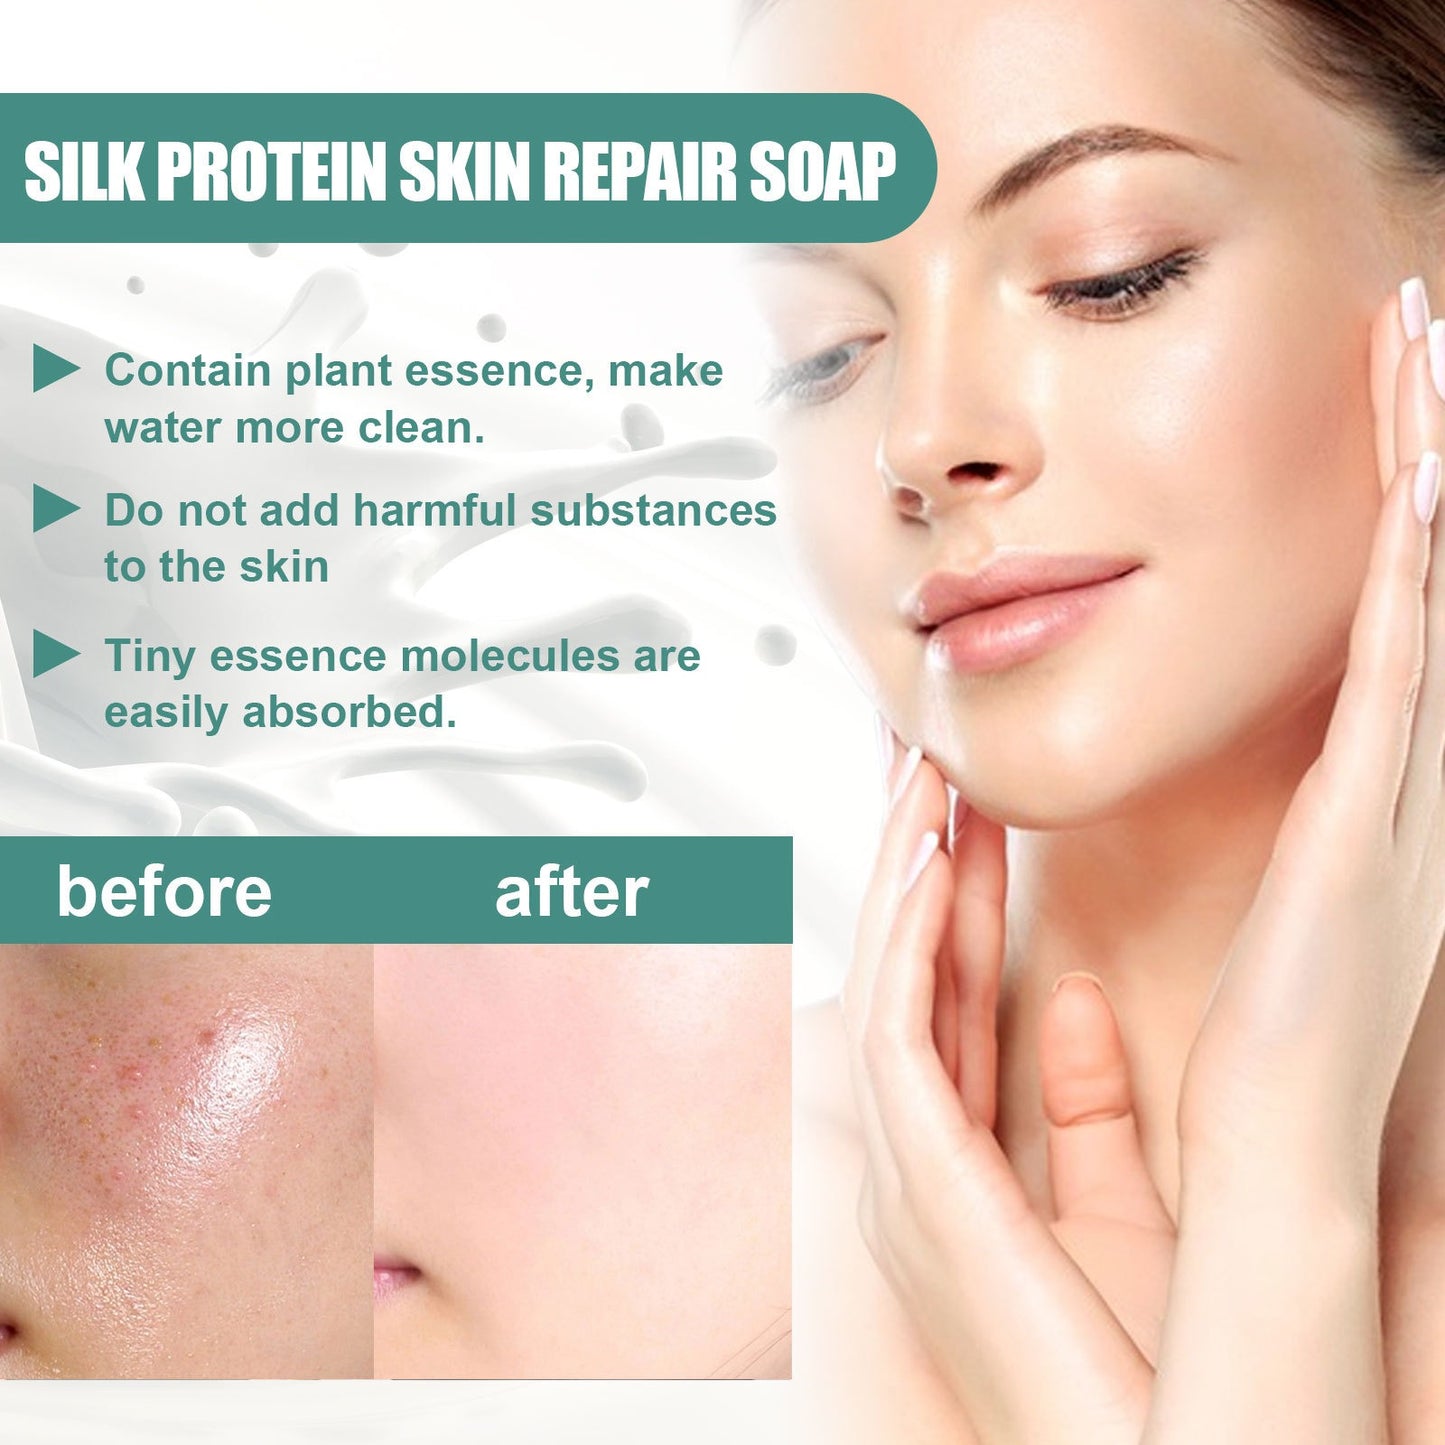 EELHOE Silk Goat Milk Hand Soap Deep Cleansing&Repairing Skin Moisturizing&Tender Silk Goat Milk Cleansing Soap